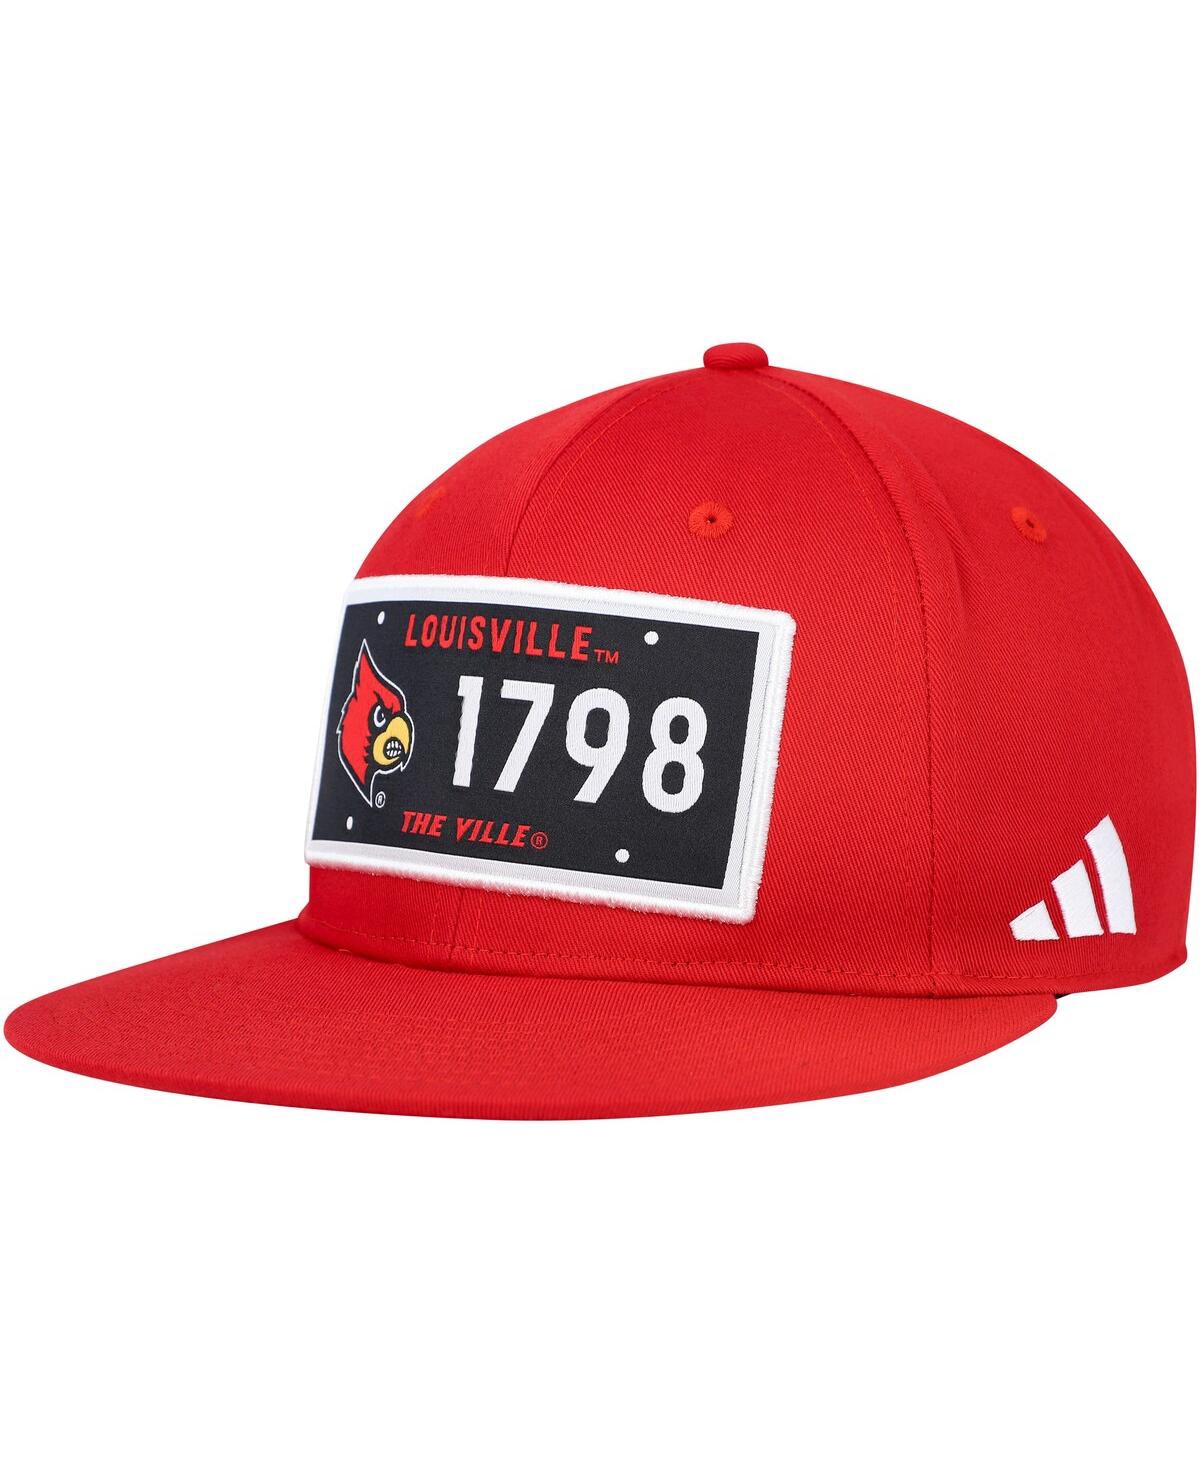 Shop Adidas Originals Men's Adidas Red Louisville Cardinals Established Snapback Hat